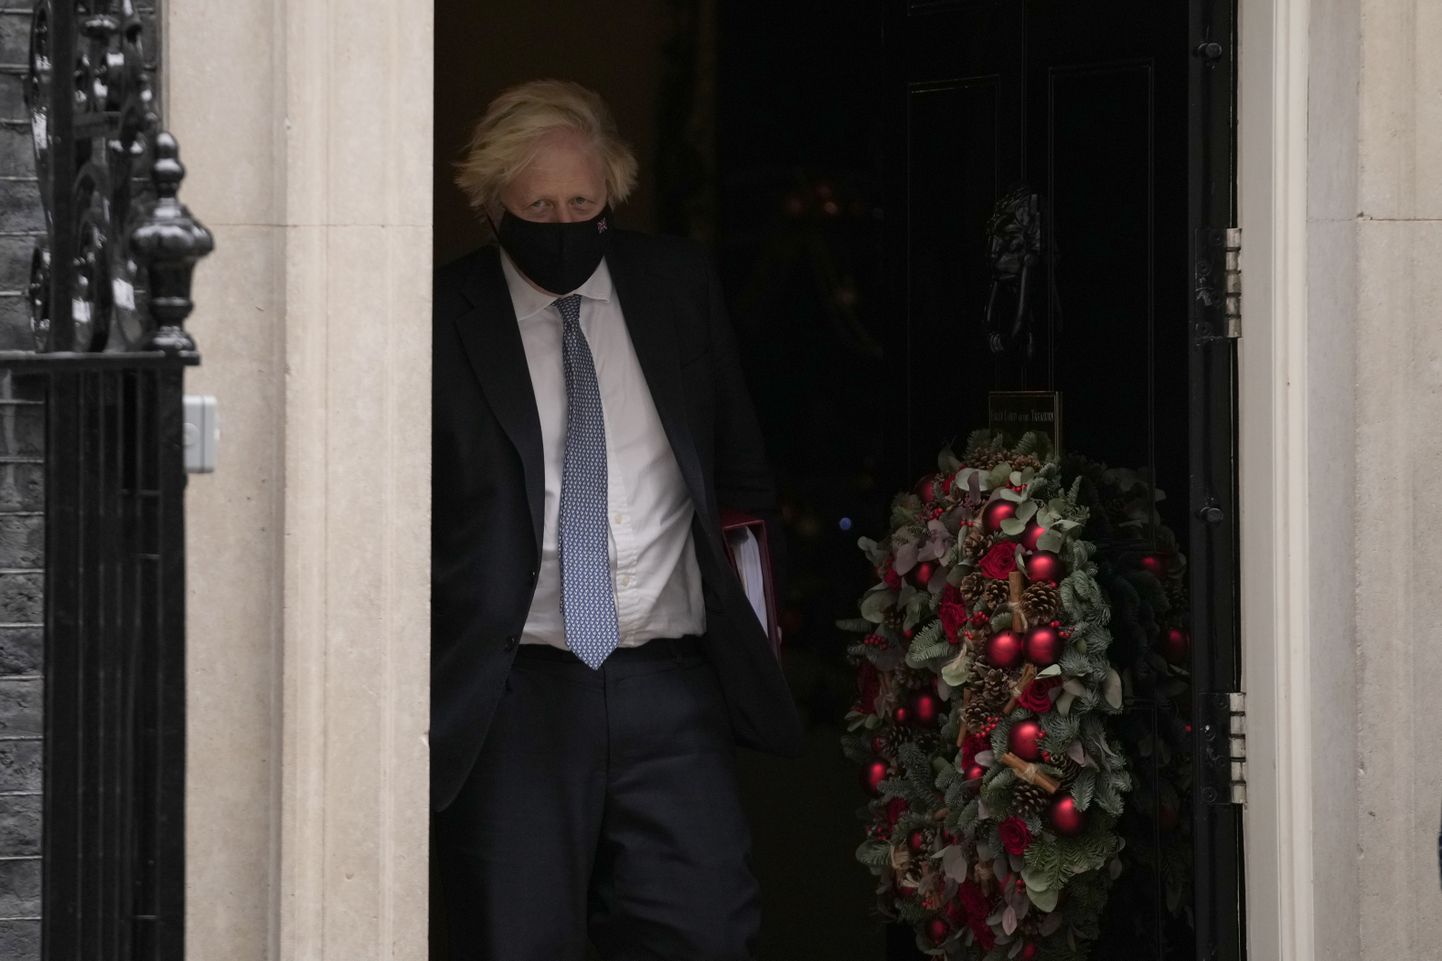 Briti pea minister Boris Johnson lahkumas 8. detsembril oma residentsist Londonis Downing Street 10, et minna parlamenti